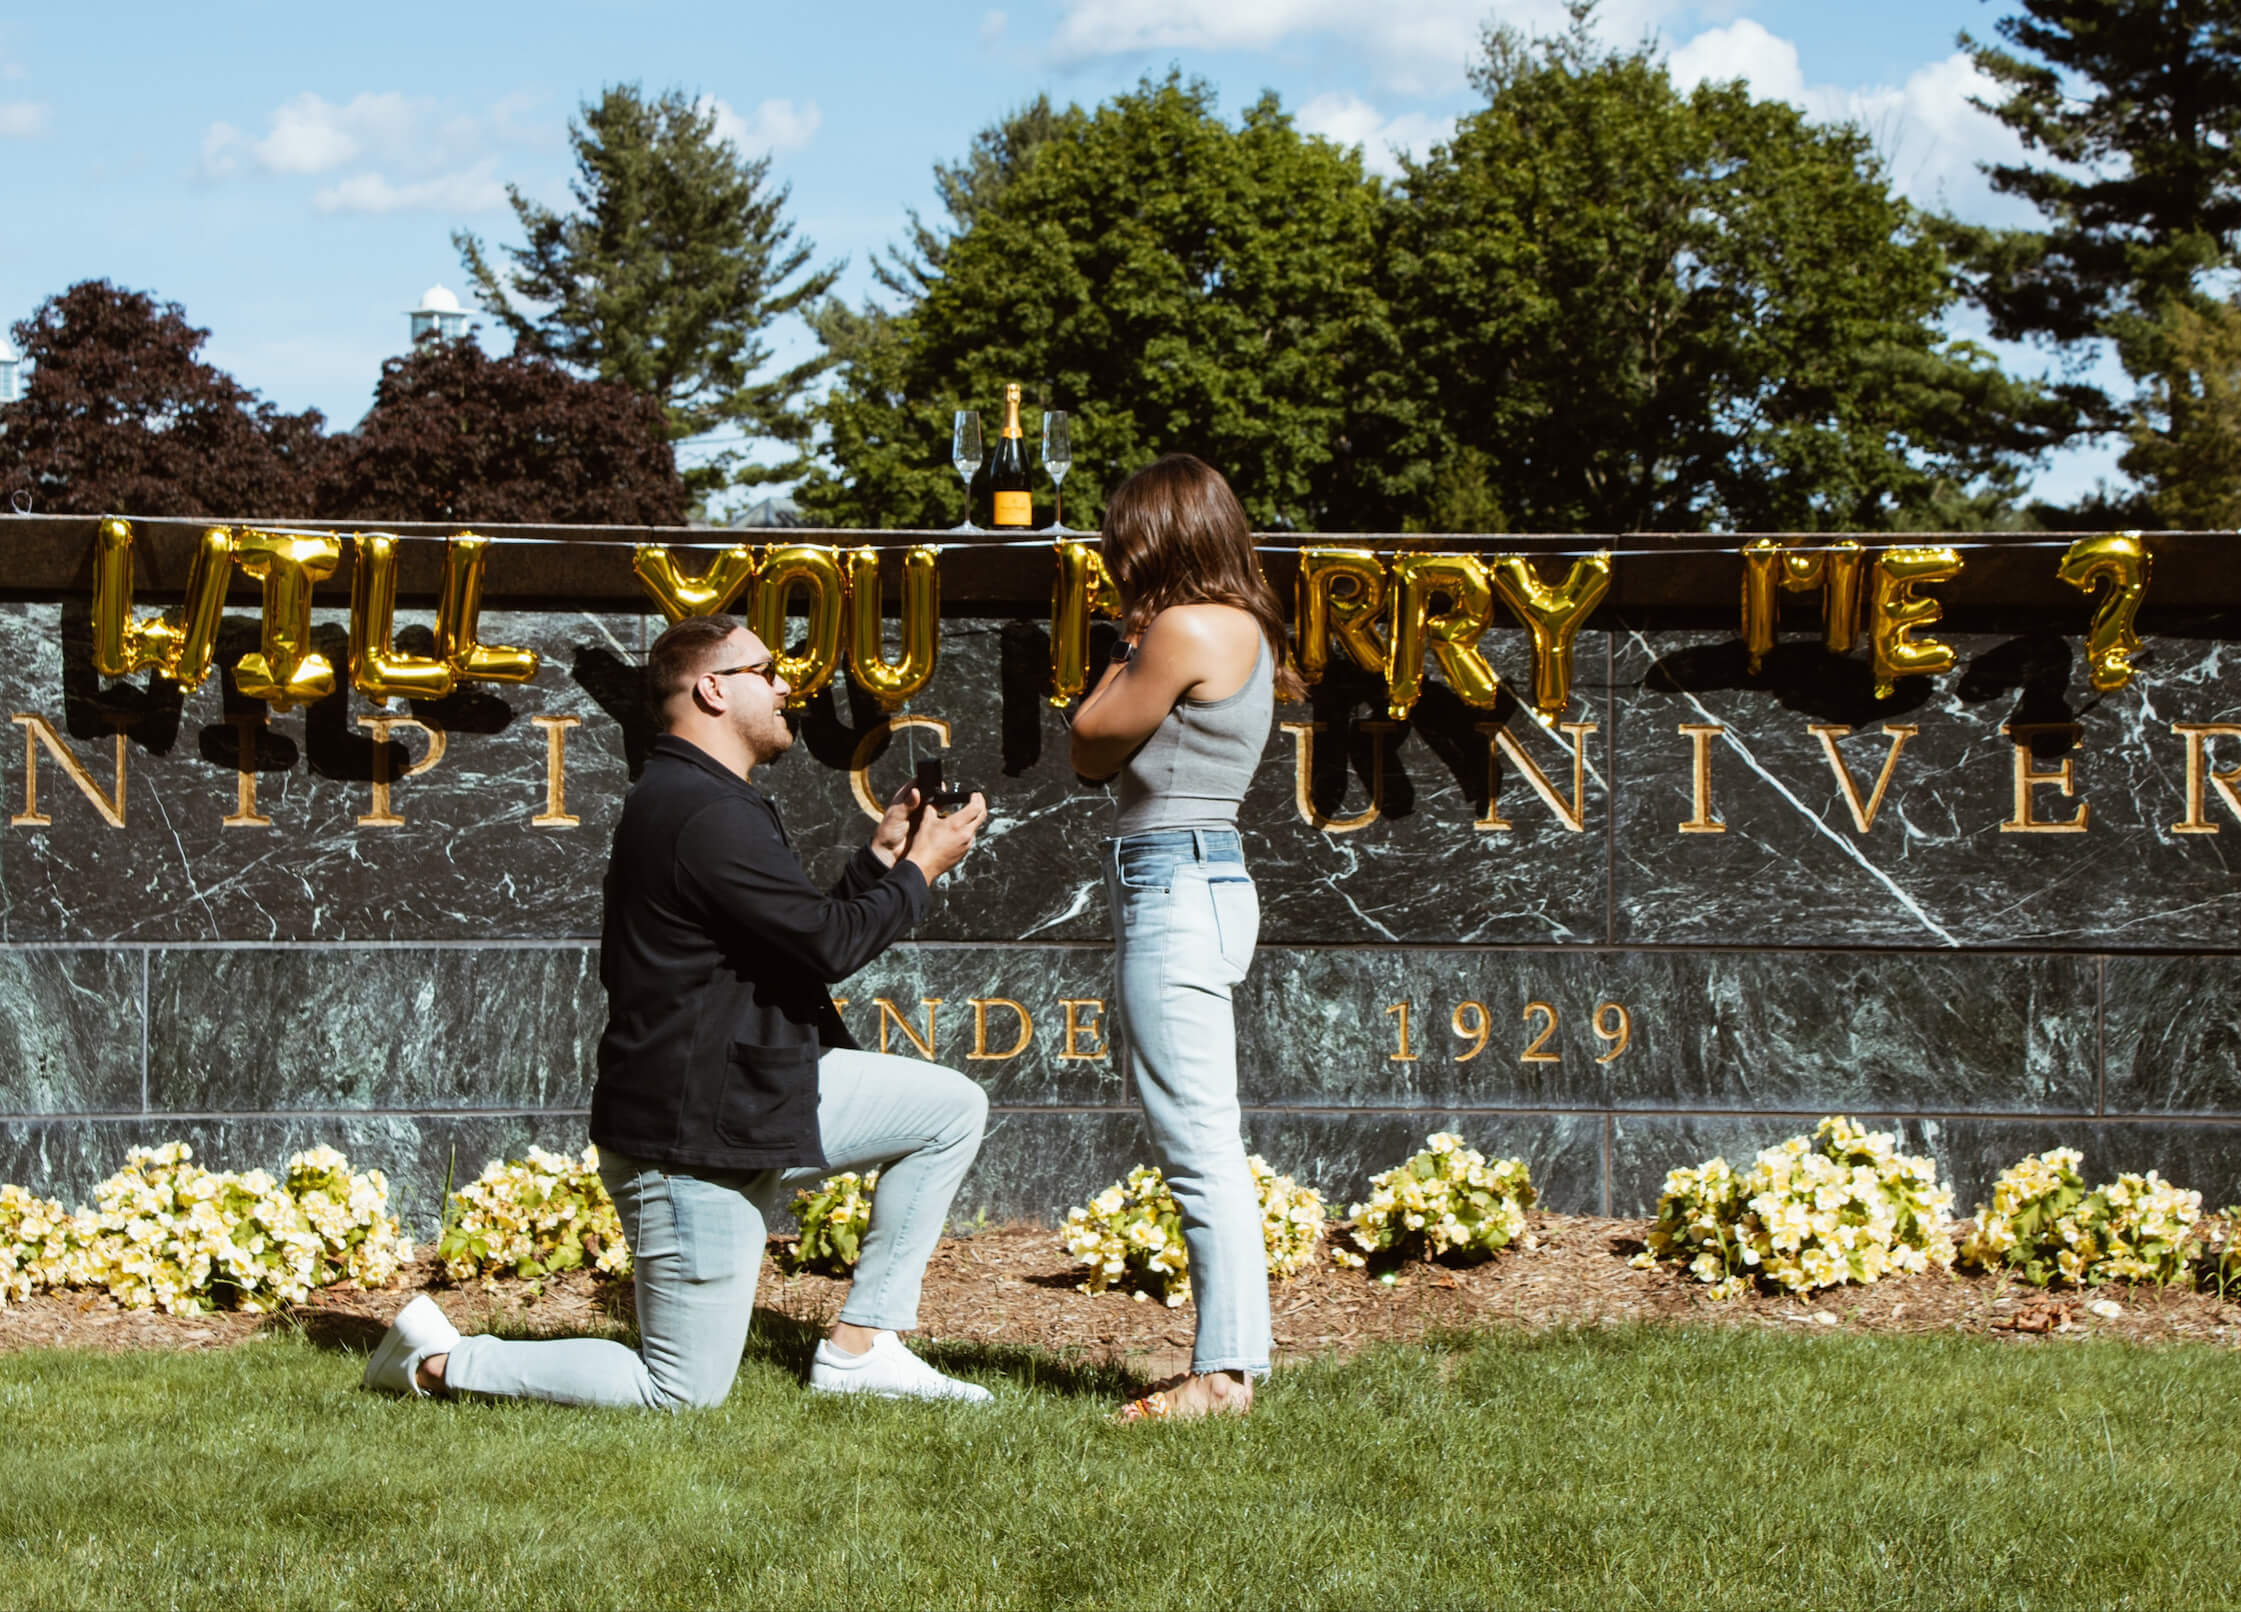 Greg Egan proposes to Rachel Wrinn on Mount Carmel campus